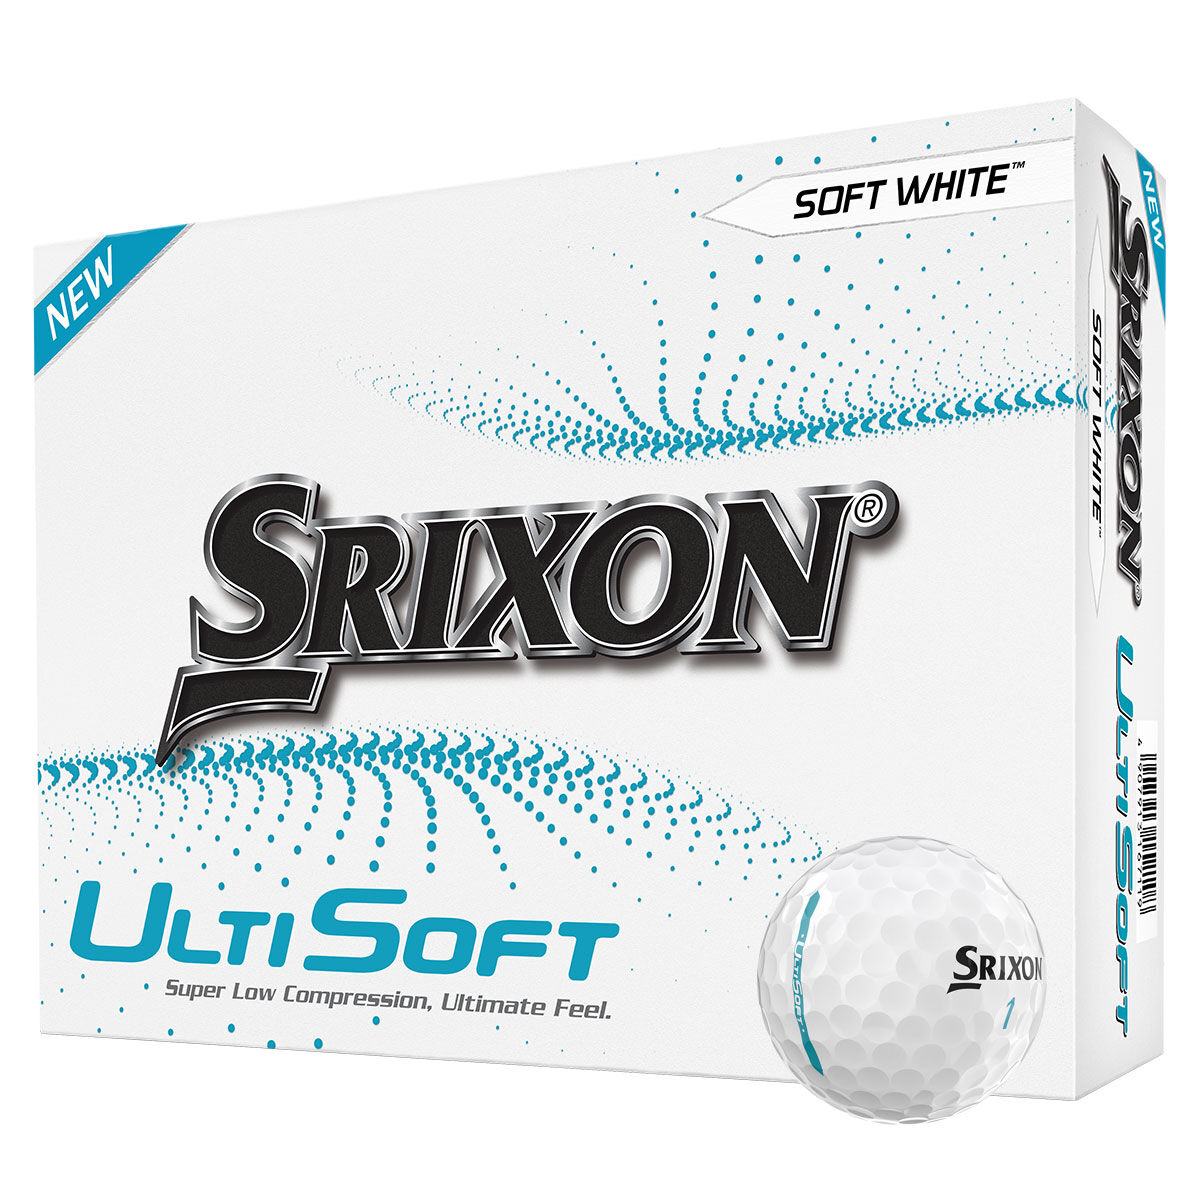 Srixon Golf Ball, White UltiSoft 12 s Pack | American Golf, one size - Father's Day Gift von Srixon